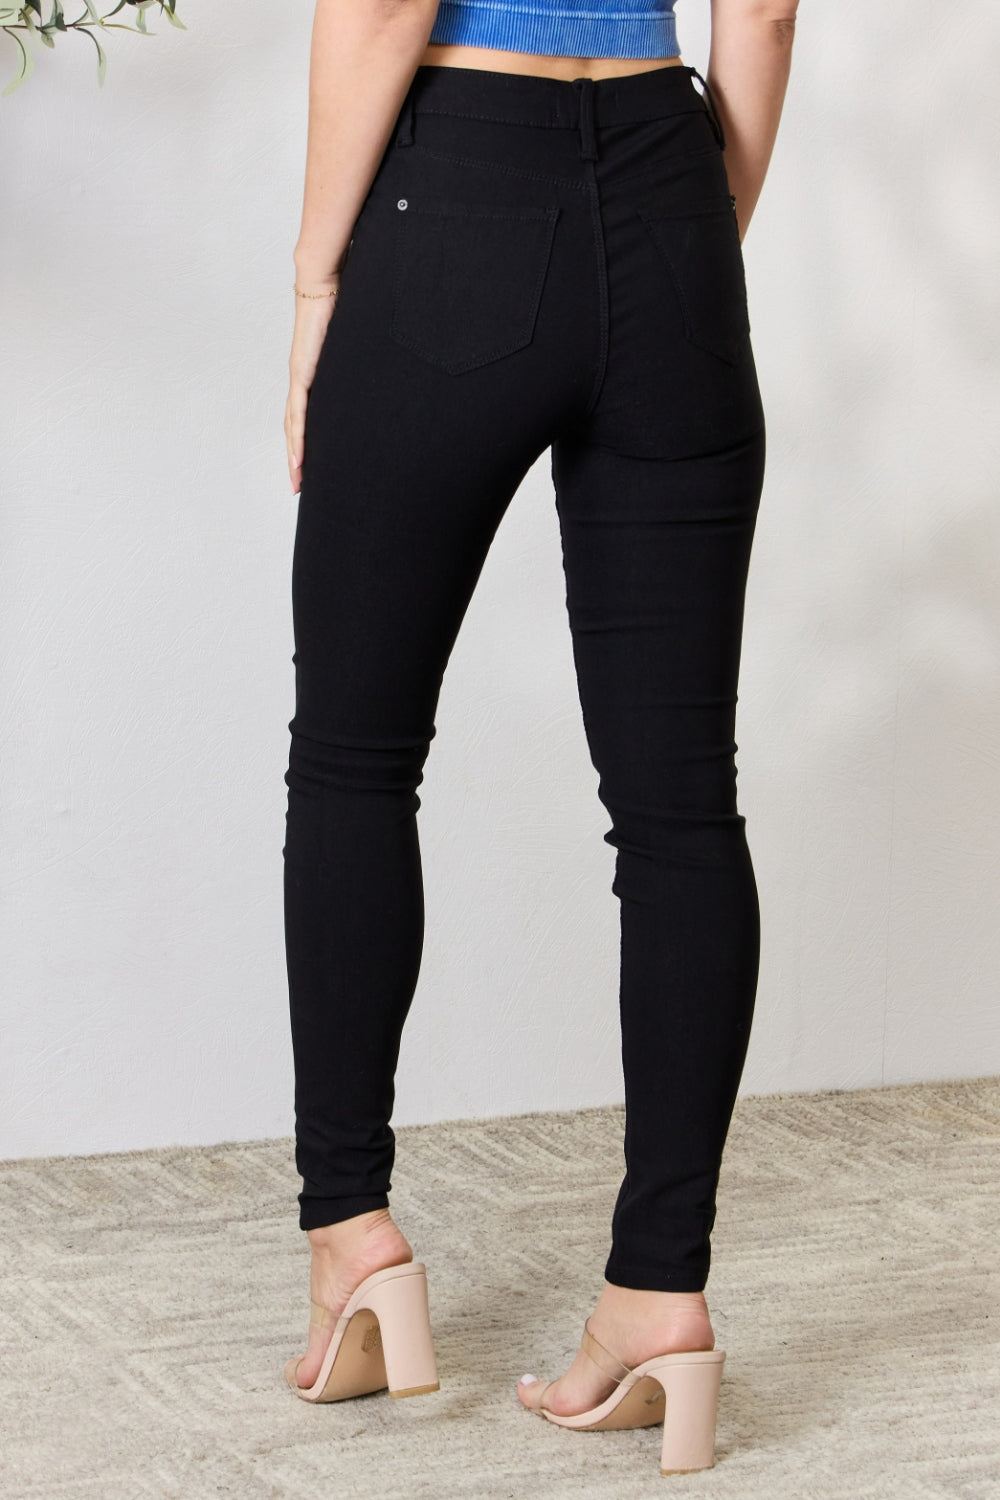 YMI Jeans - Hyperstretch Skinny Jeans - Black